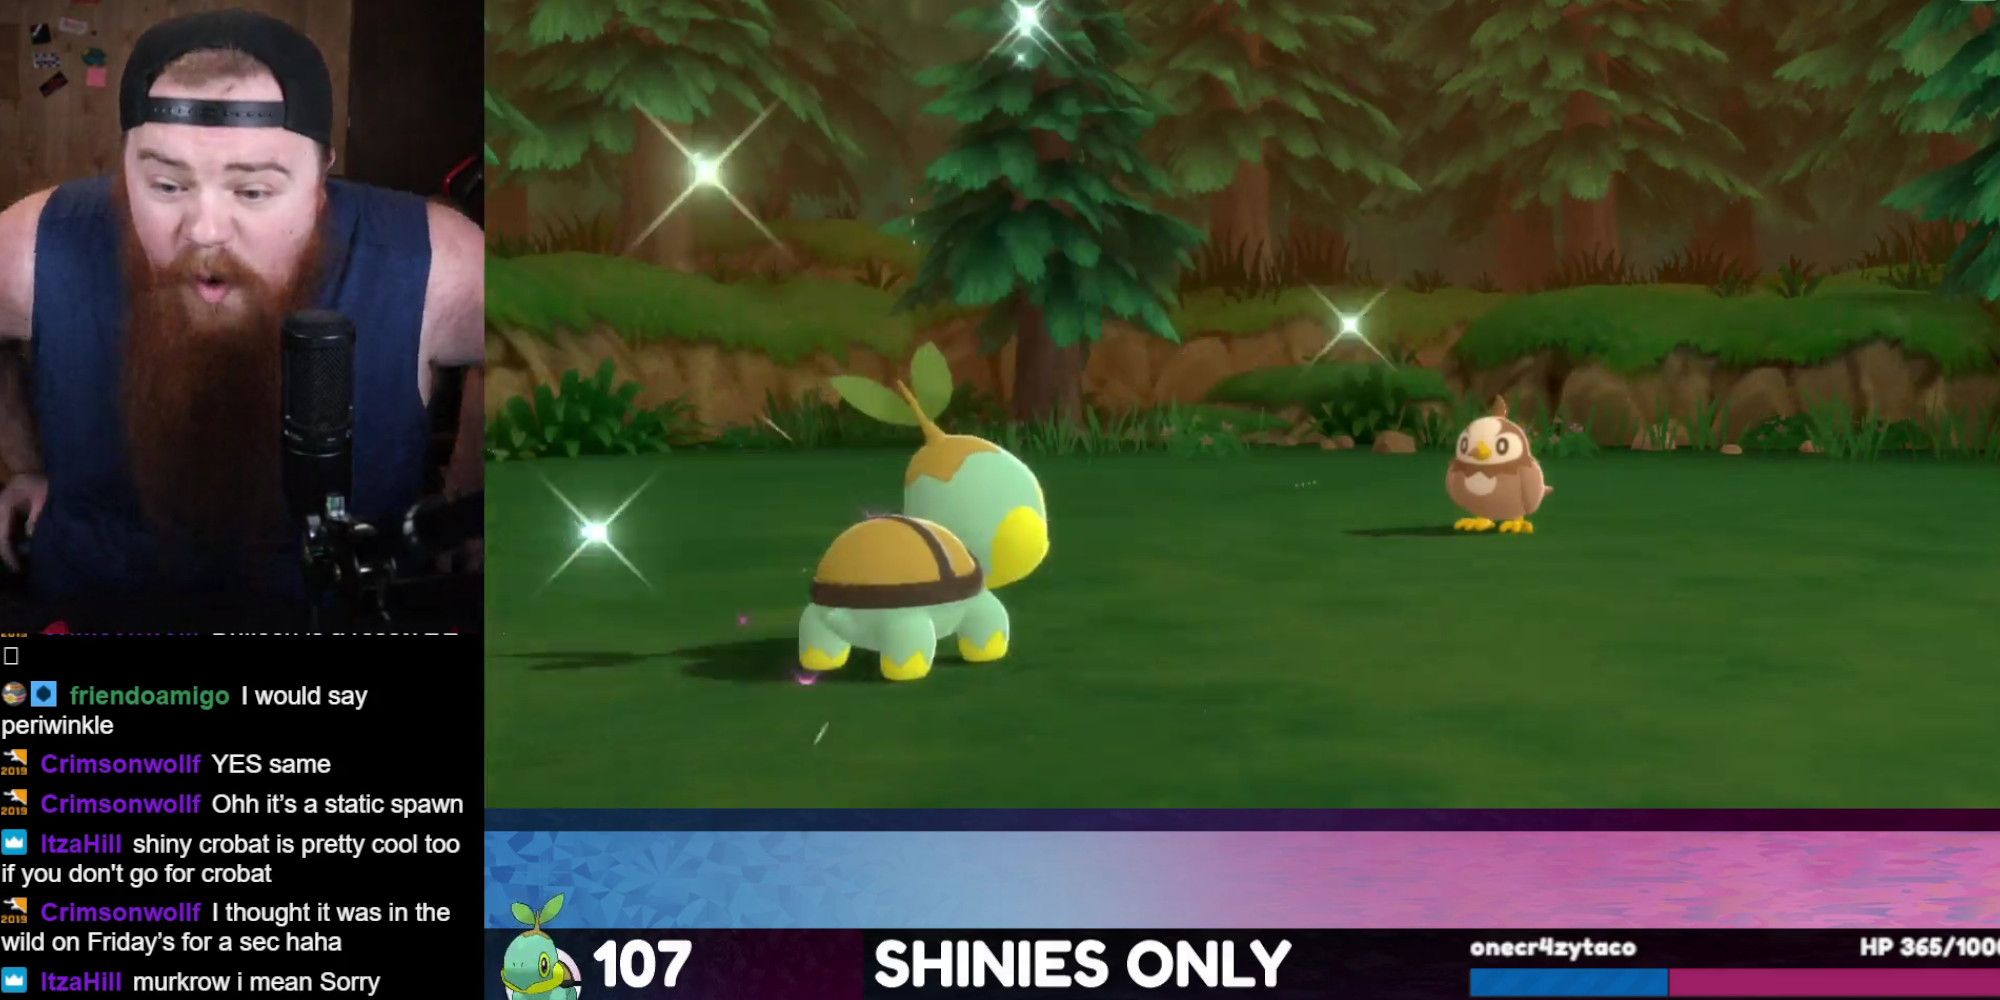 Pokemon Brilliant Diamond & Shining Pearl: How to Get Shiny Starters